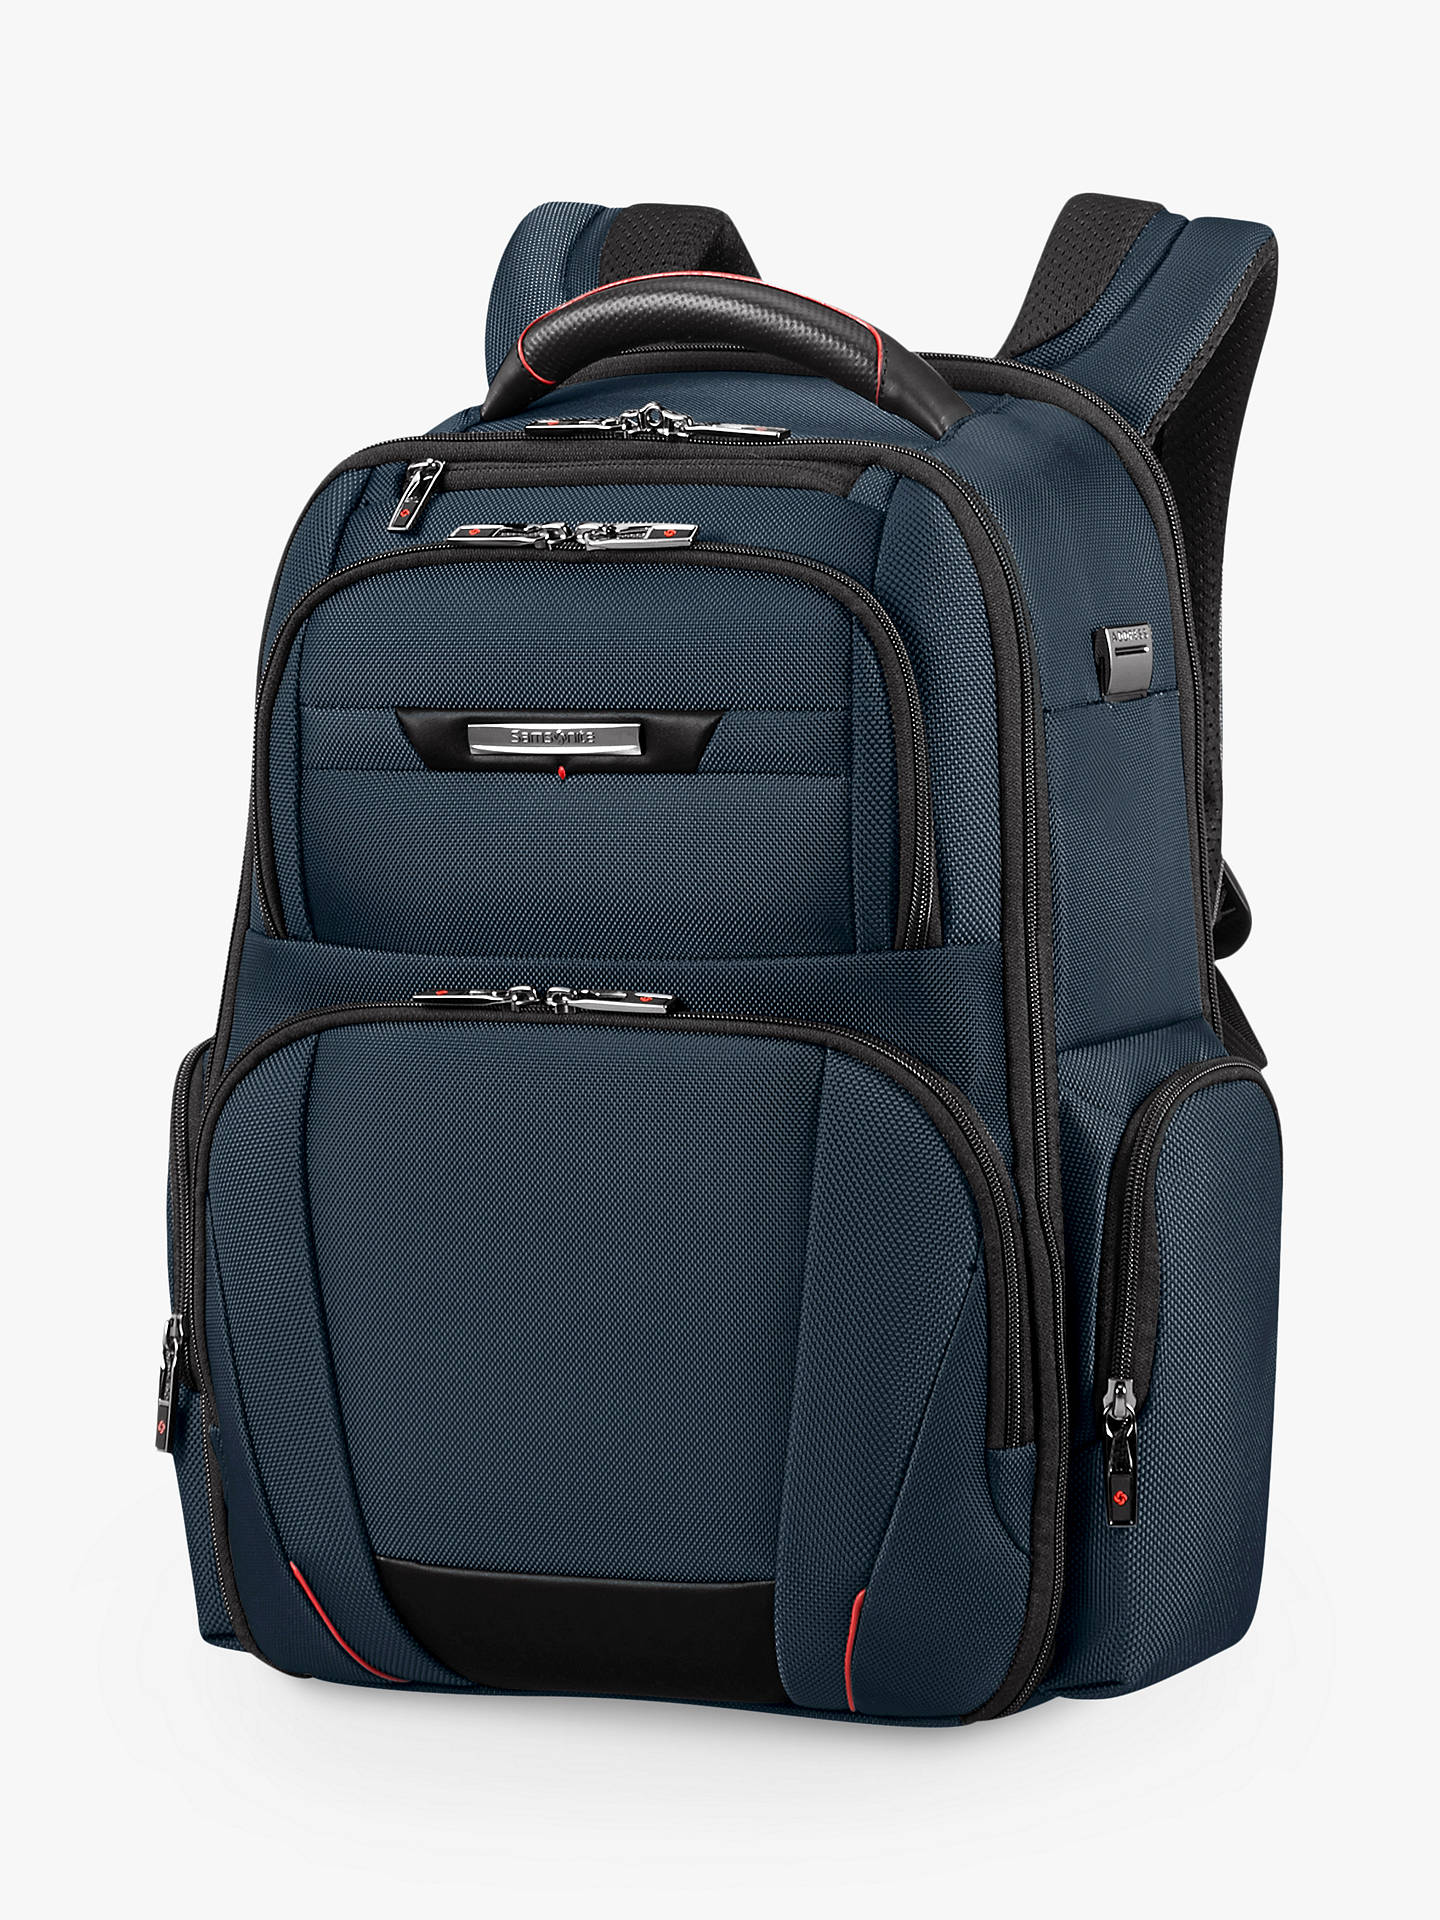 Samsonite Business Deluxe Backpack | IUCN Water